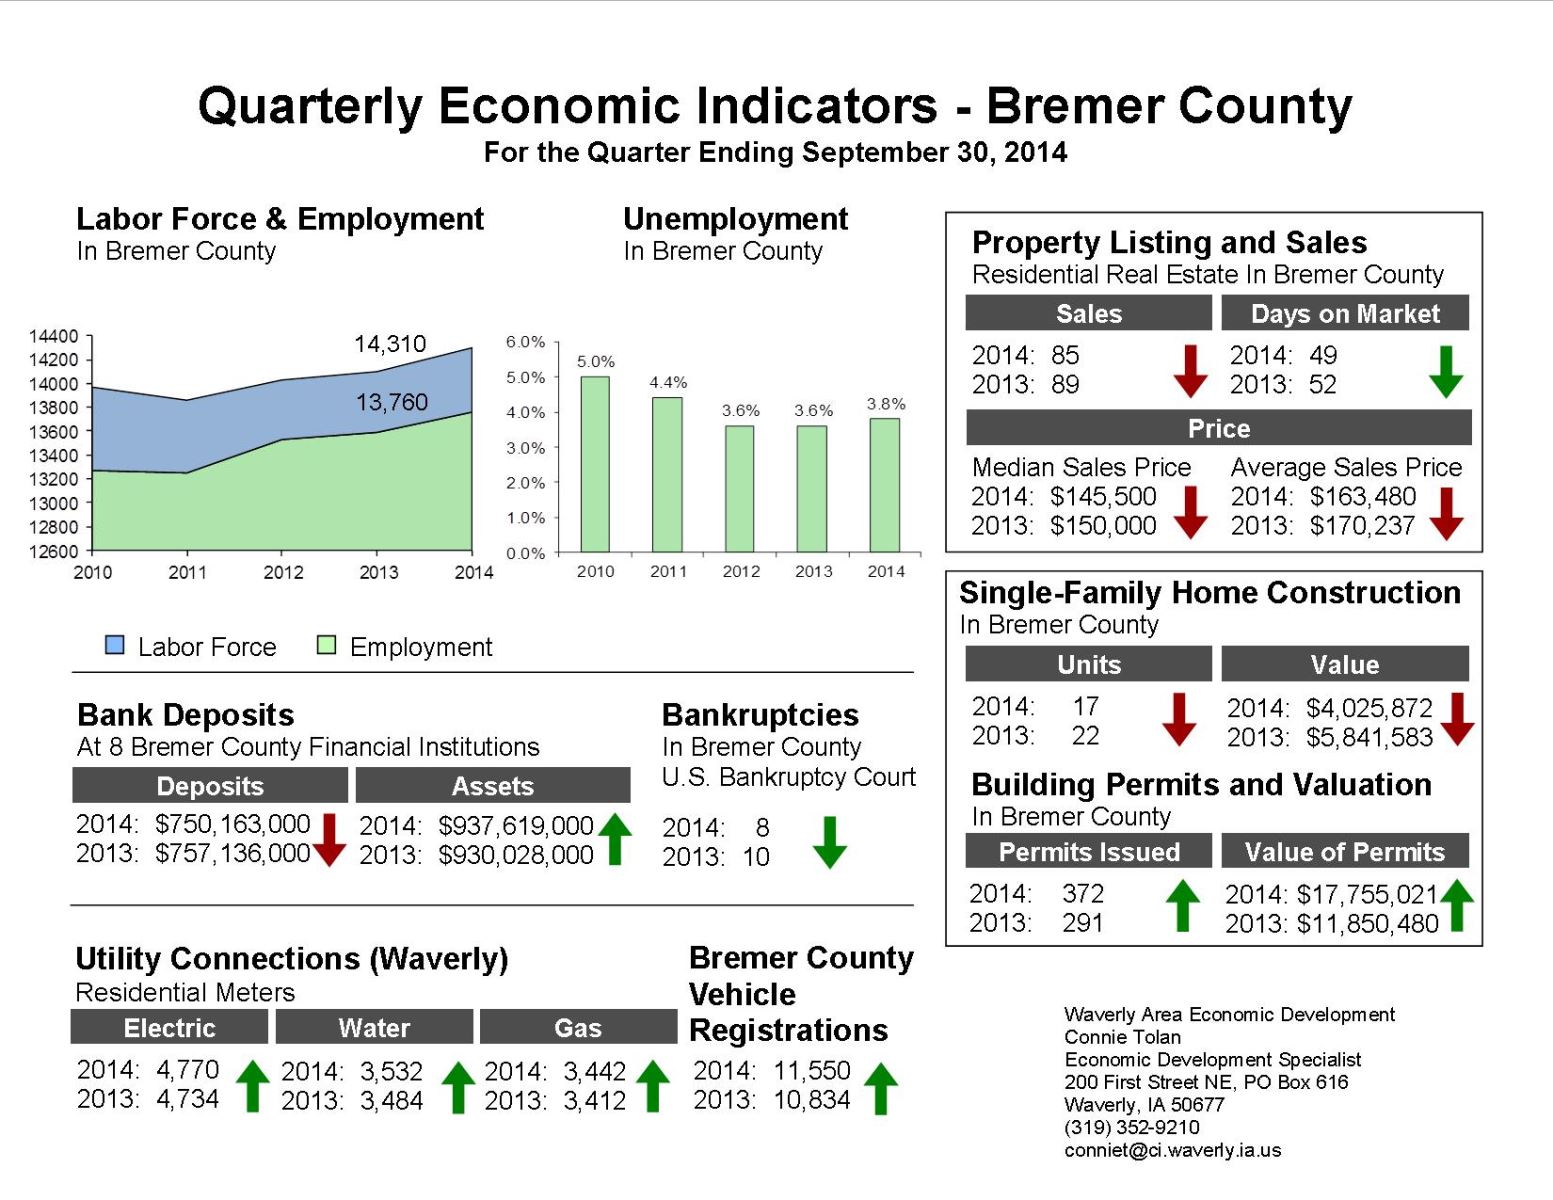 Quarterly Economic Indicators - 3rd Qtr 2014